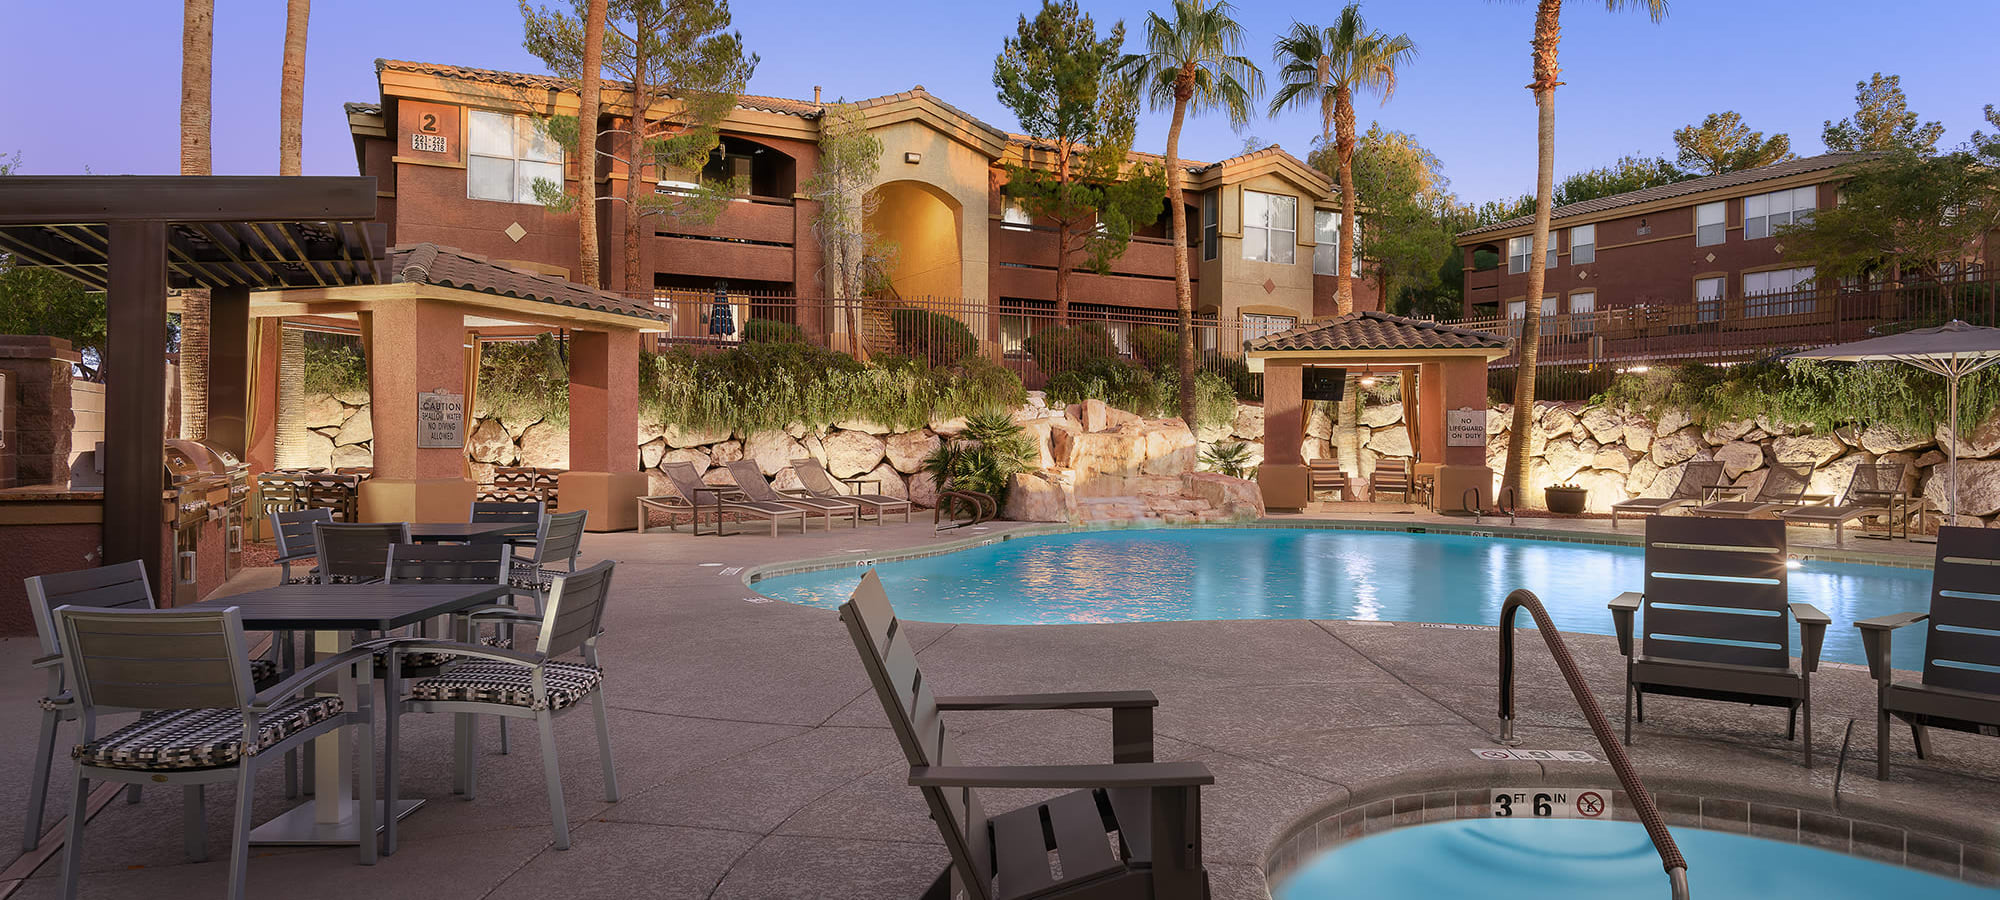 Resort-style pool at Allegro at La Entrada in Henderson, Nevada